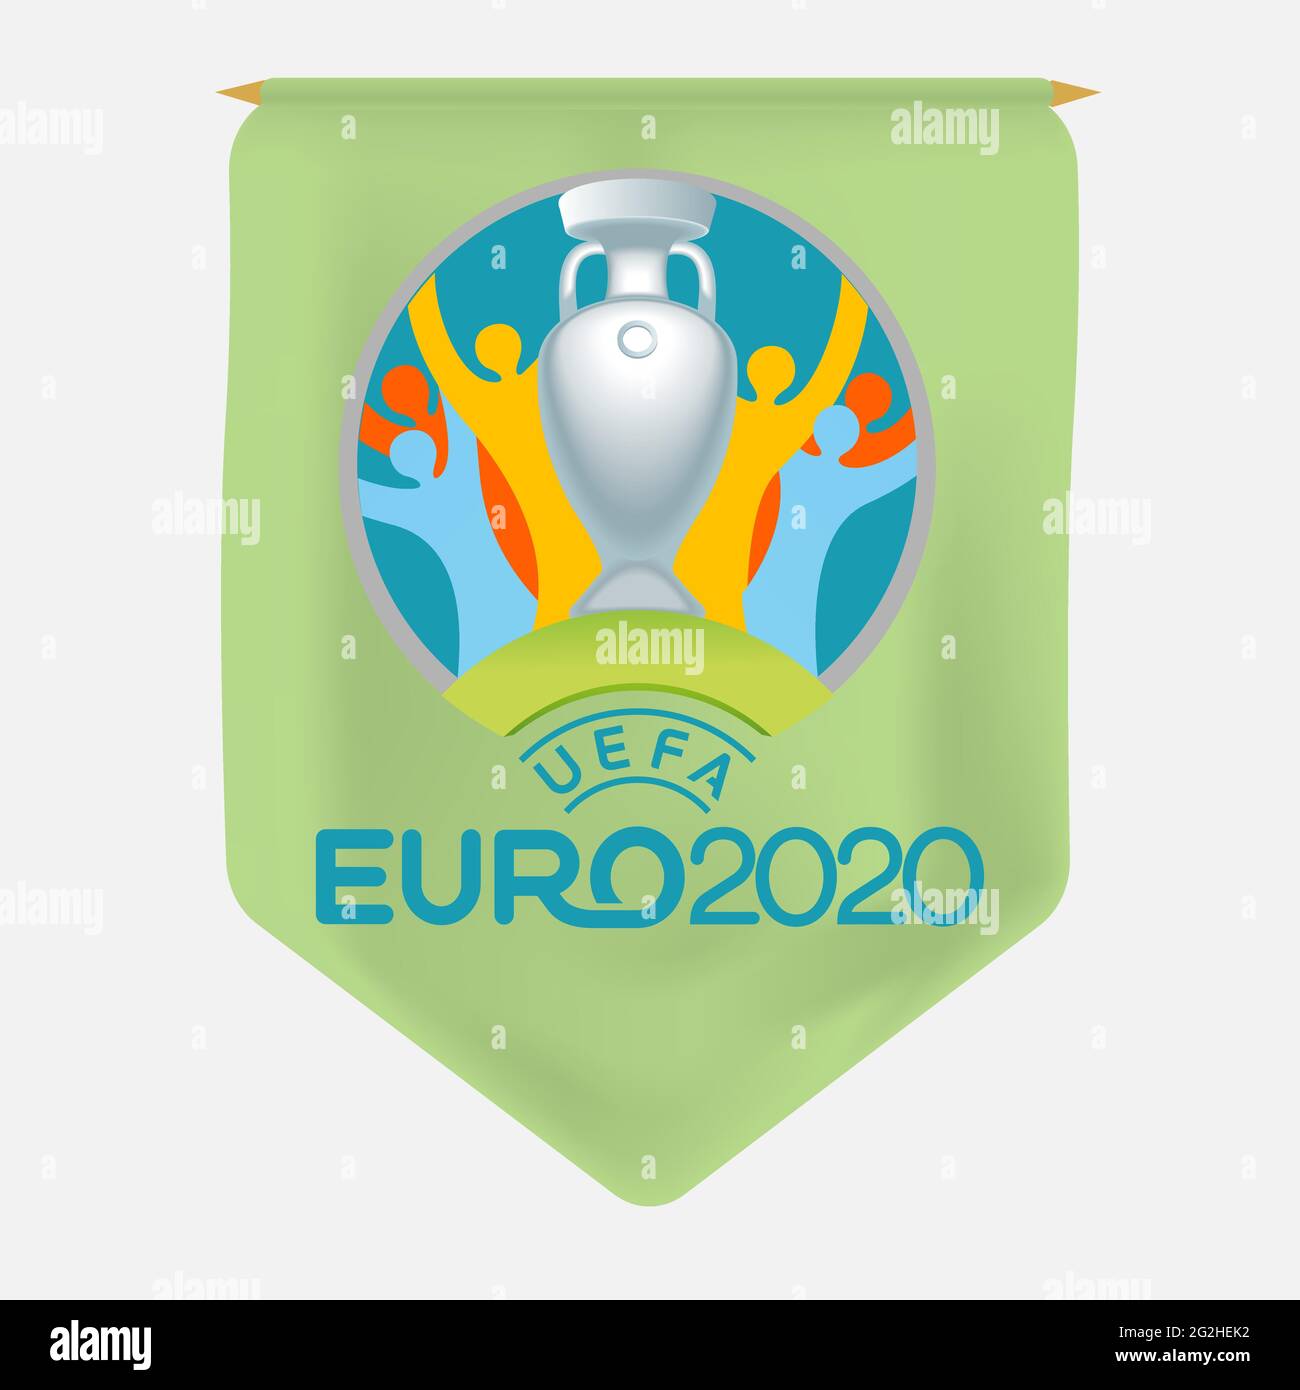 EURO 2020 UEFA European Championship logo set. Stock Vector